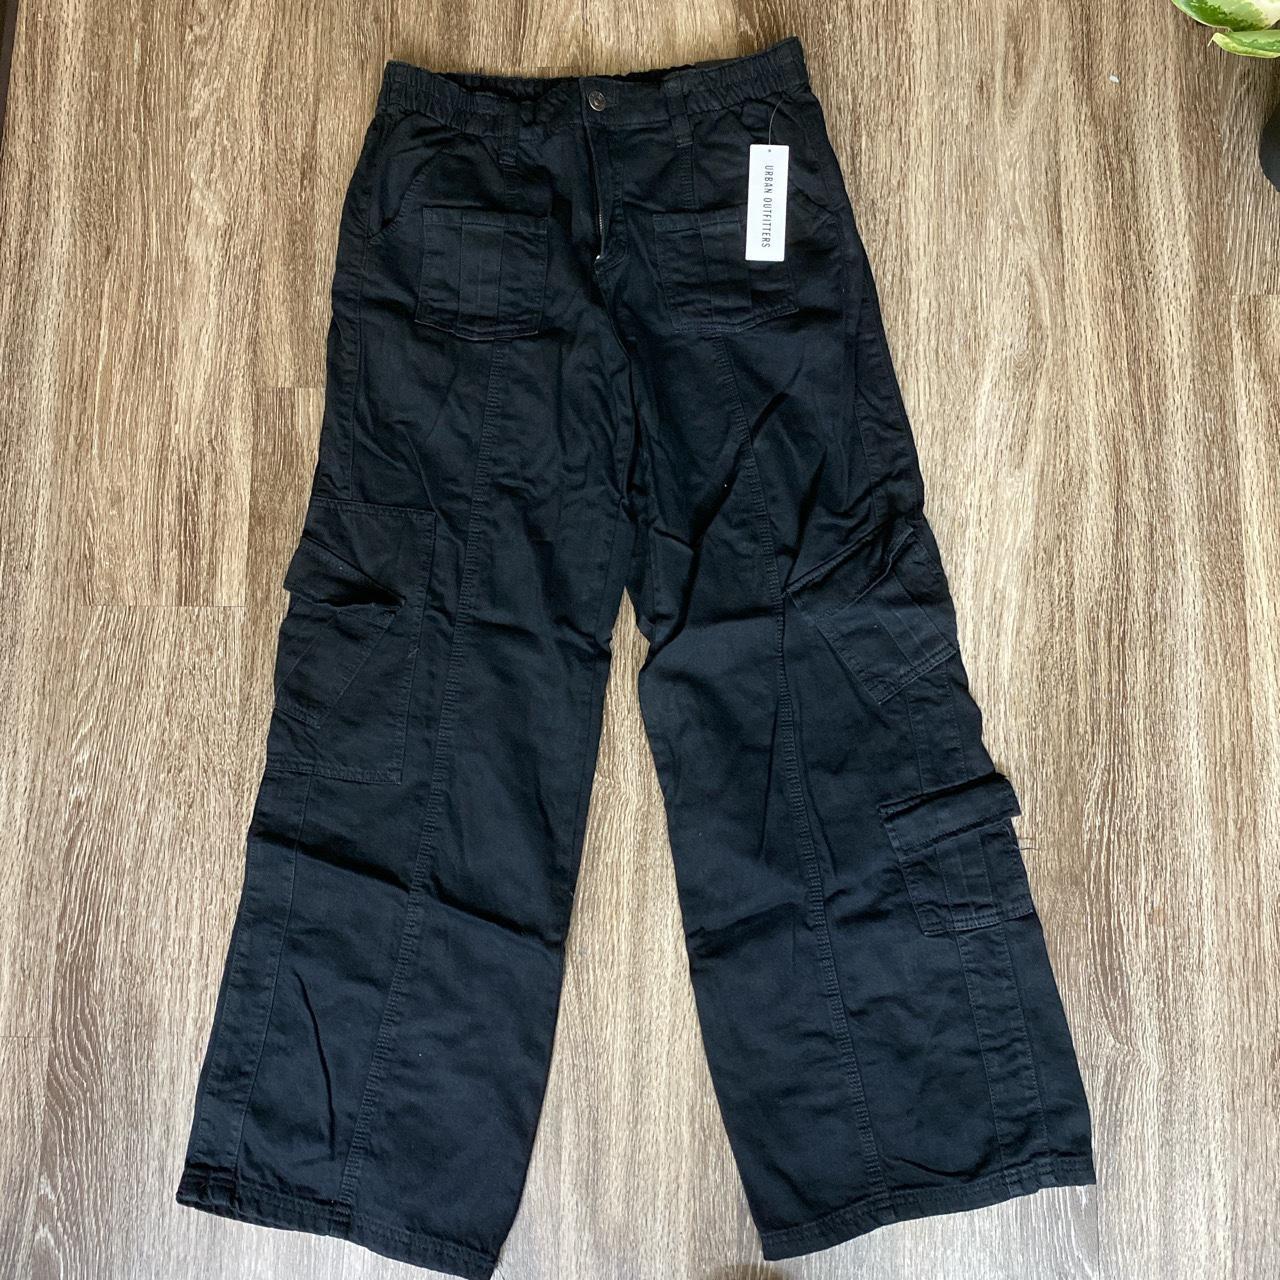 Size 33 Black BDG cargo pants #BDG #cargopants - Depop